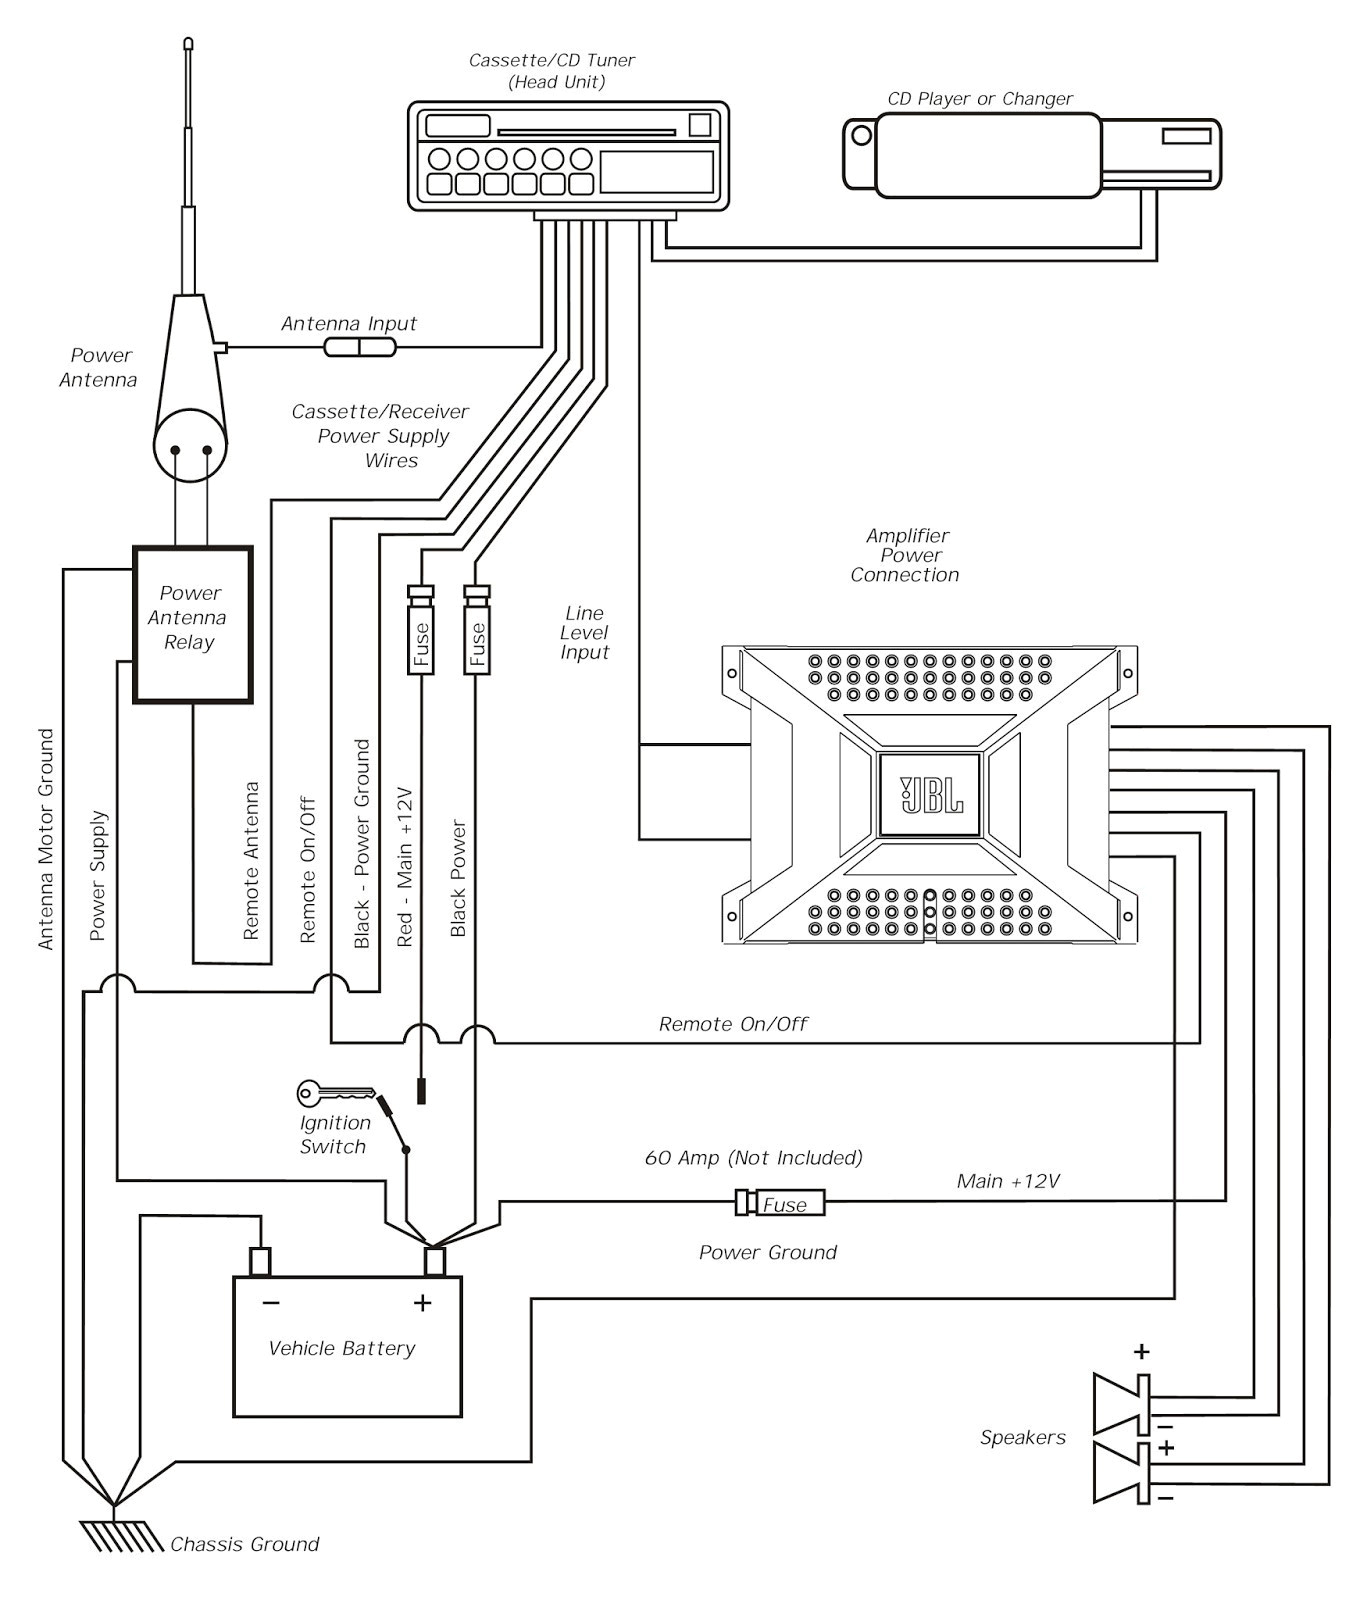 fantech wiring diagram awesome fantech wiring diagram free downloads ec motor wiring house wiring